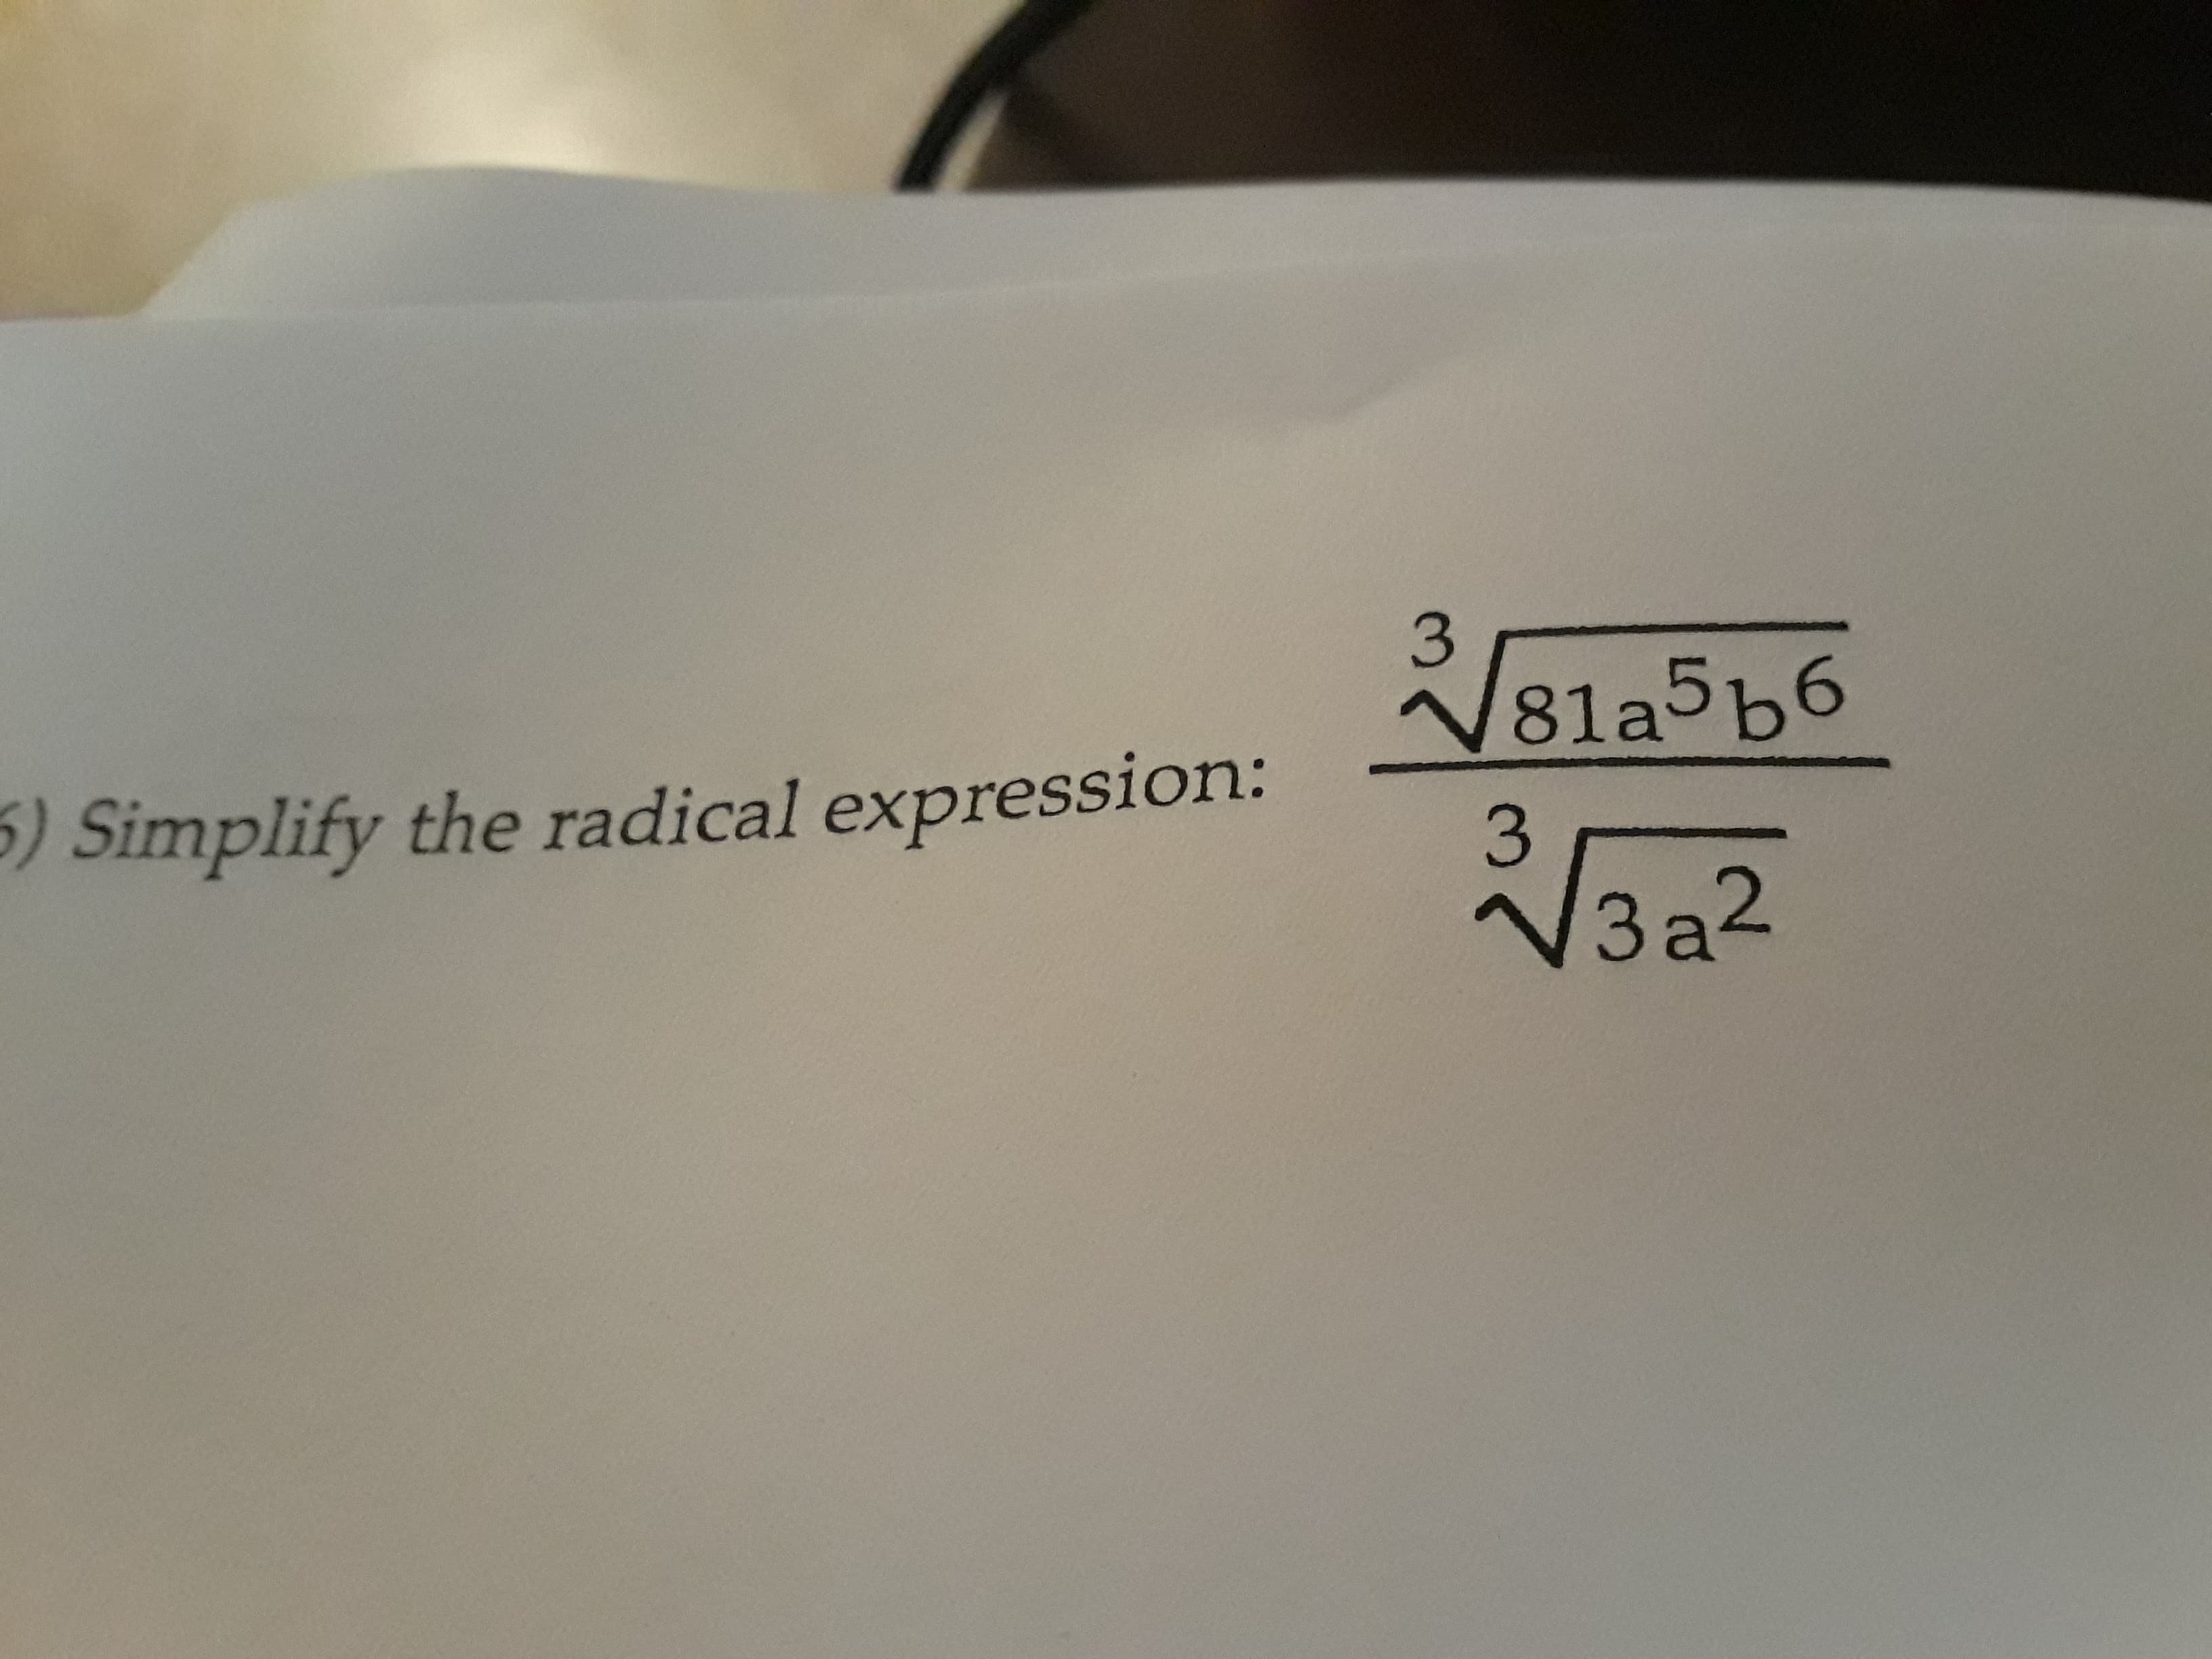 3
V81a5 b6
) Simplify the radical expressi on:
3
3 a2
